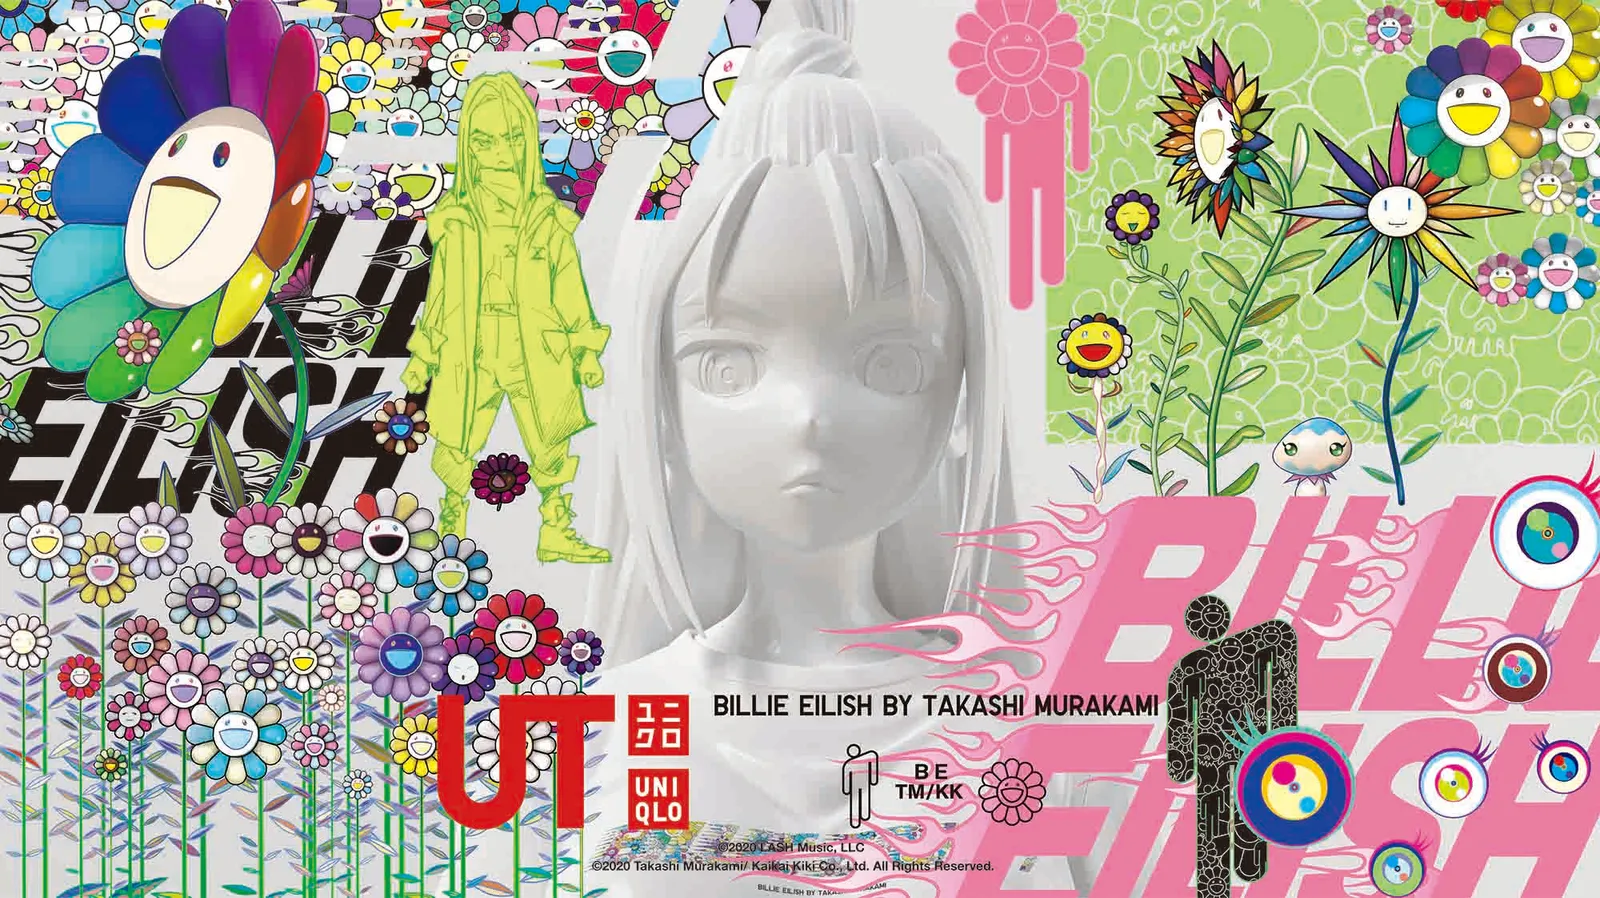 UNIQLO Merilis Koleksi Billie Eilish x Takashi Murakami UT